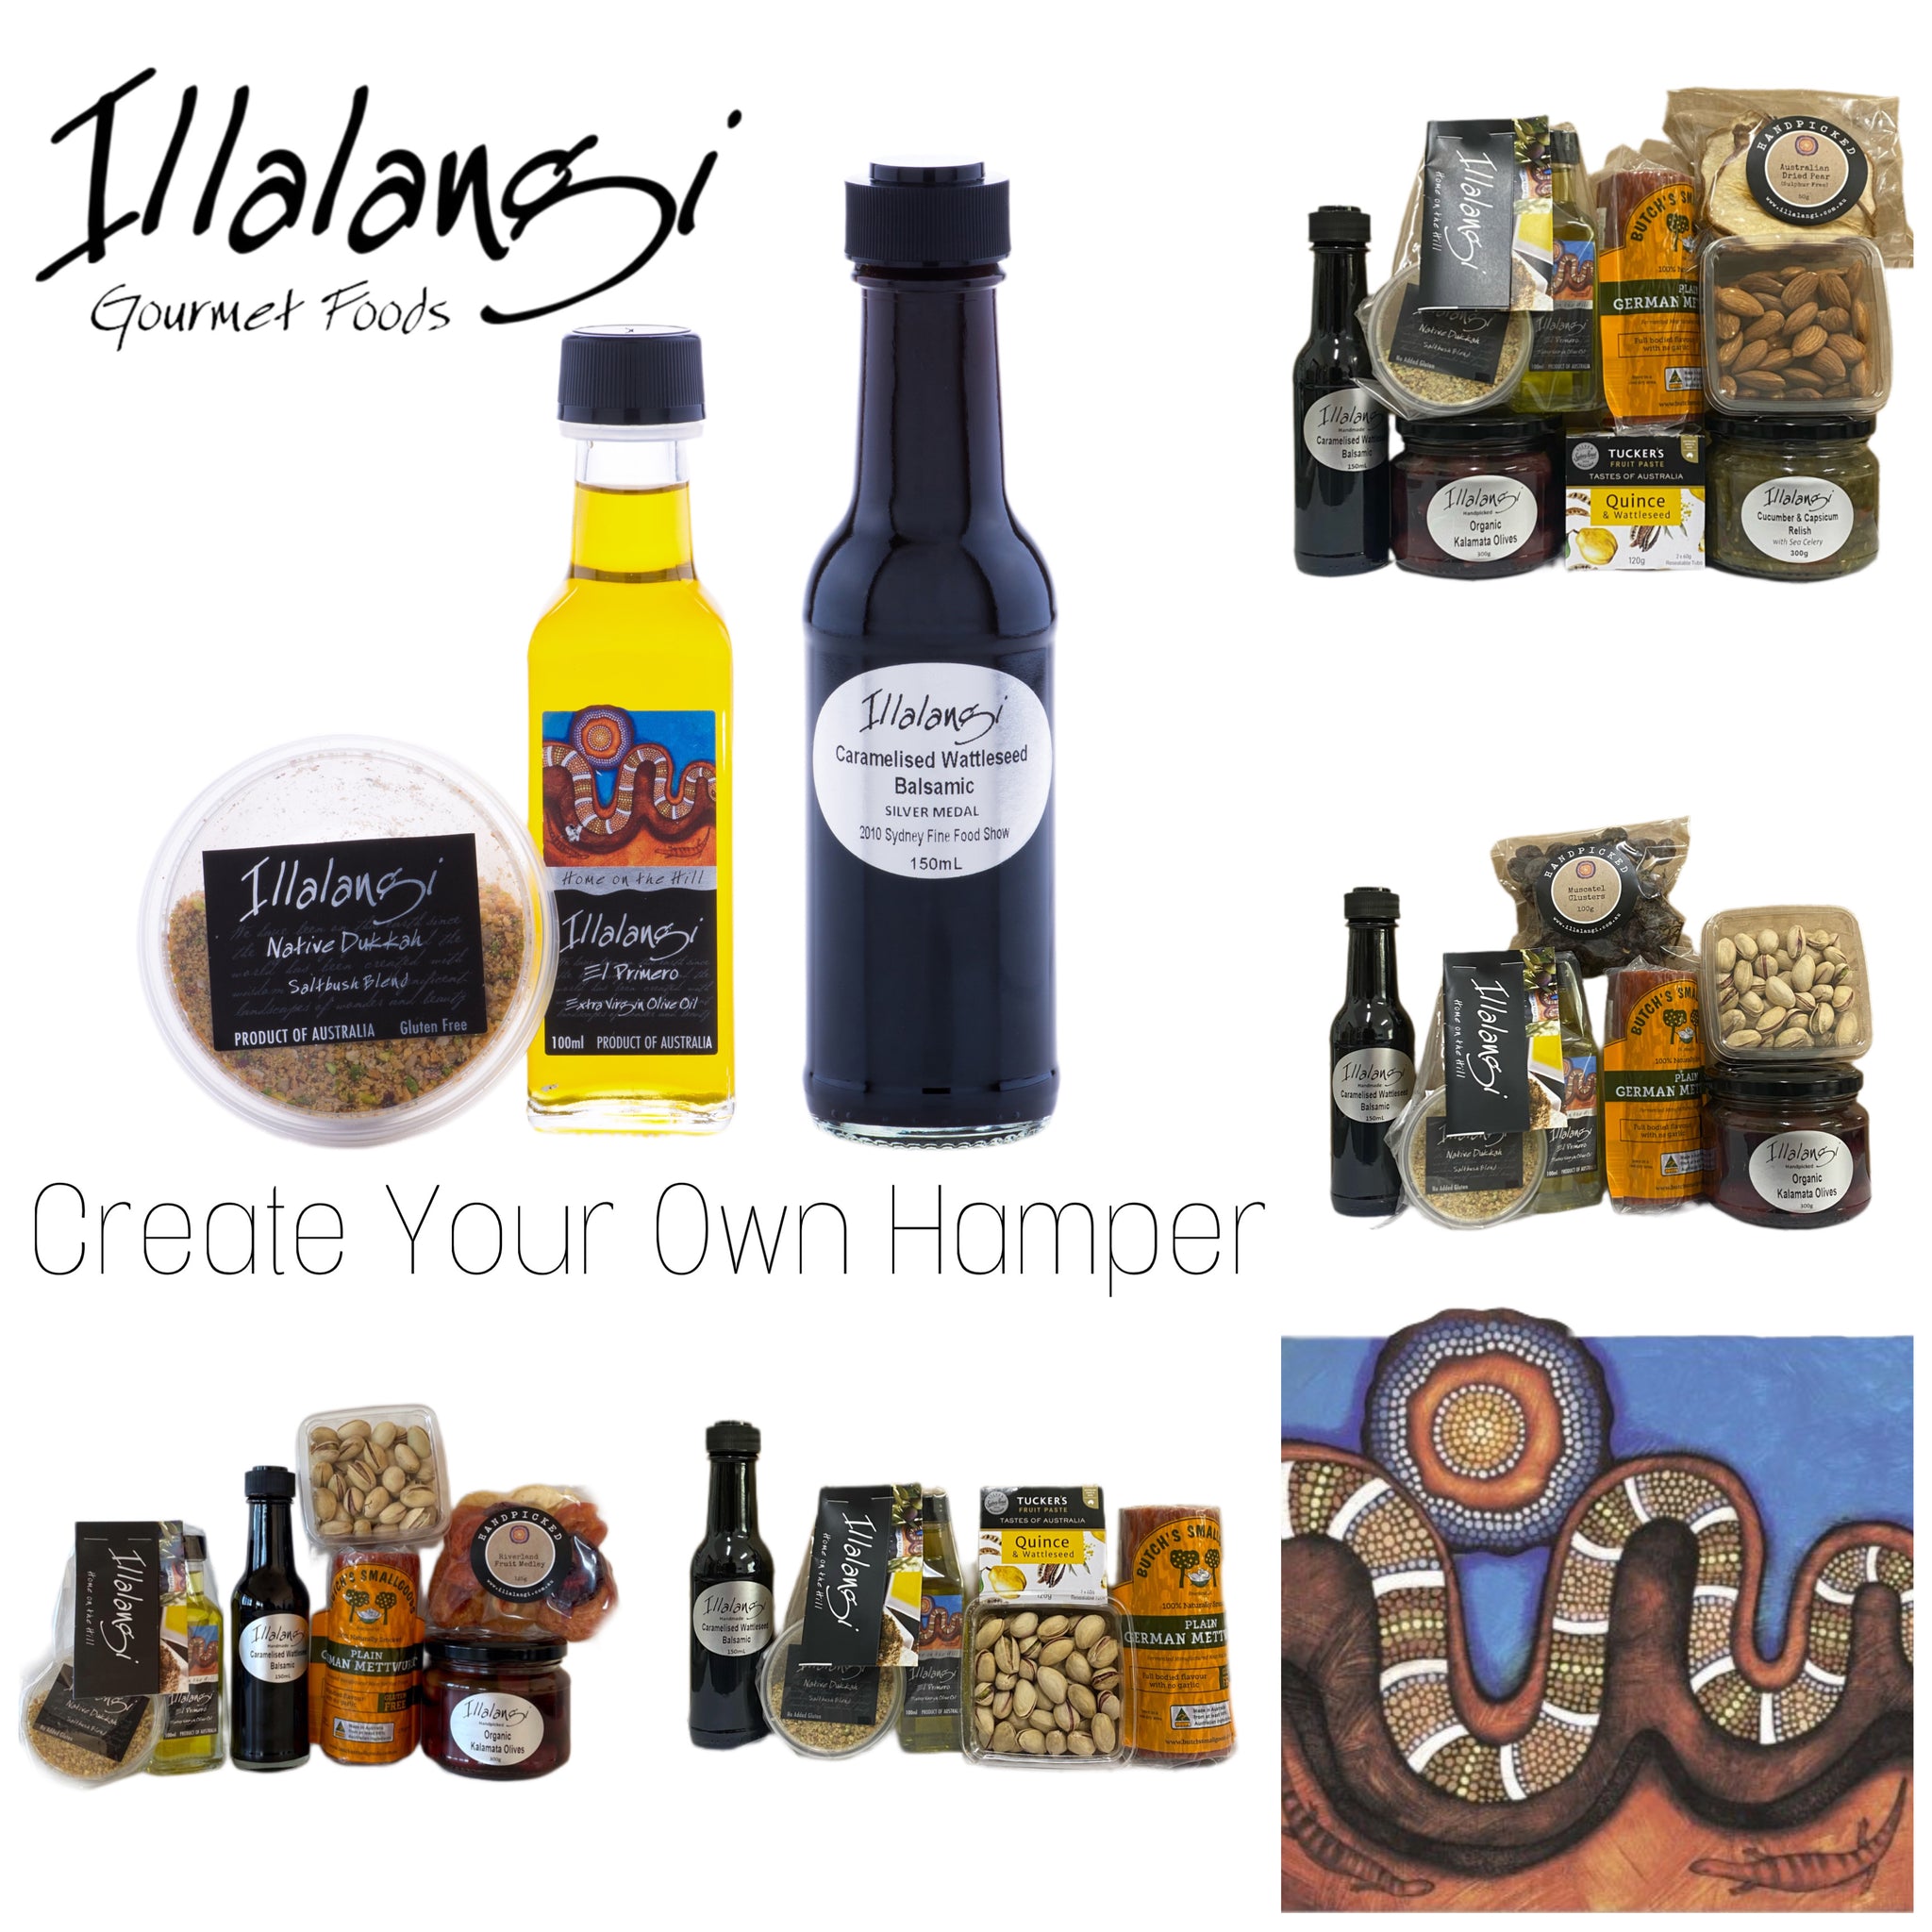 Create Your Own Illalangi Gourmet Gift Hamper